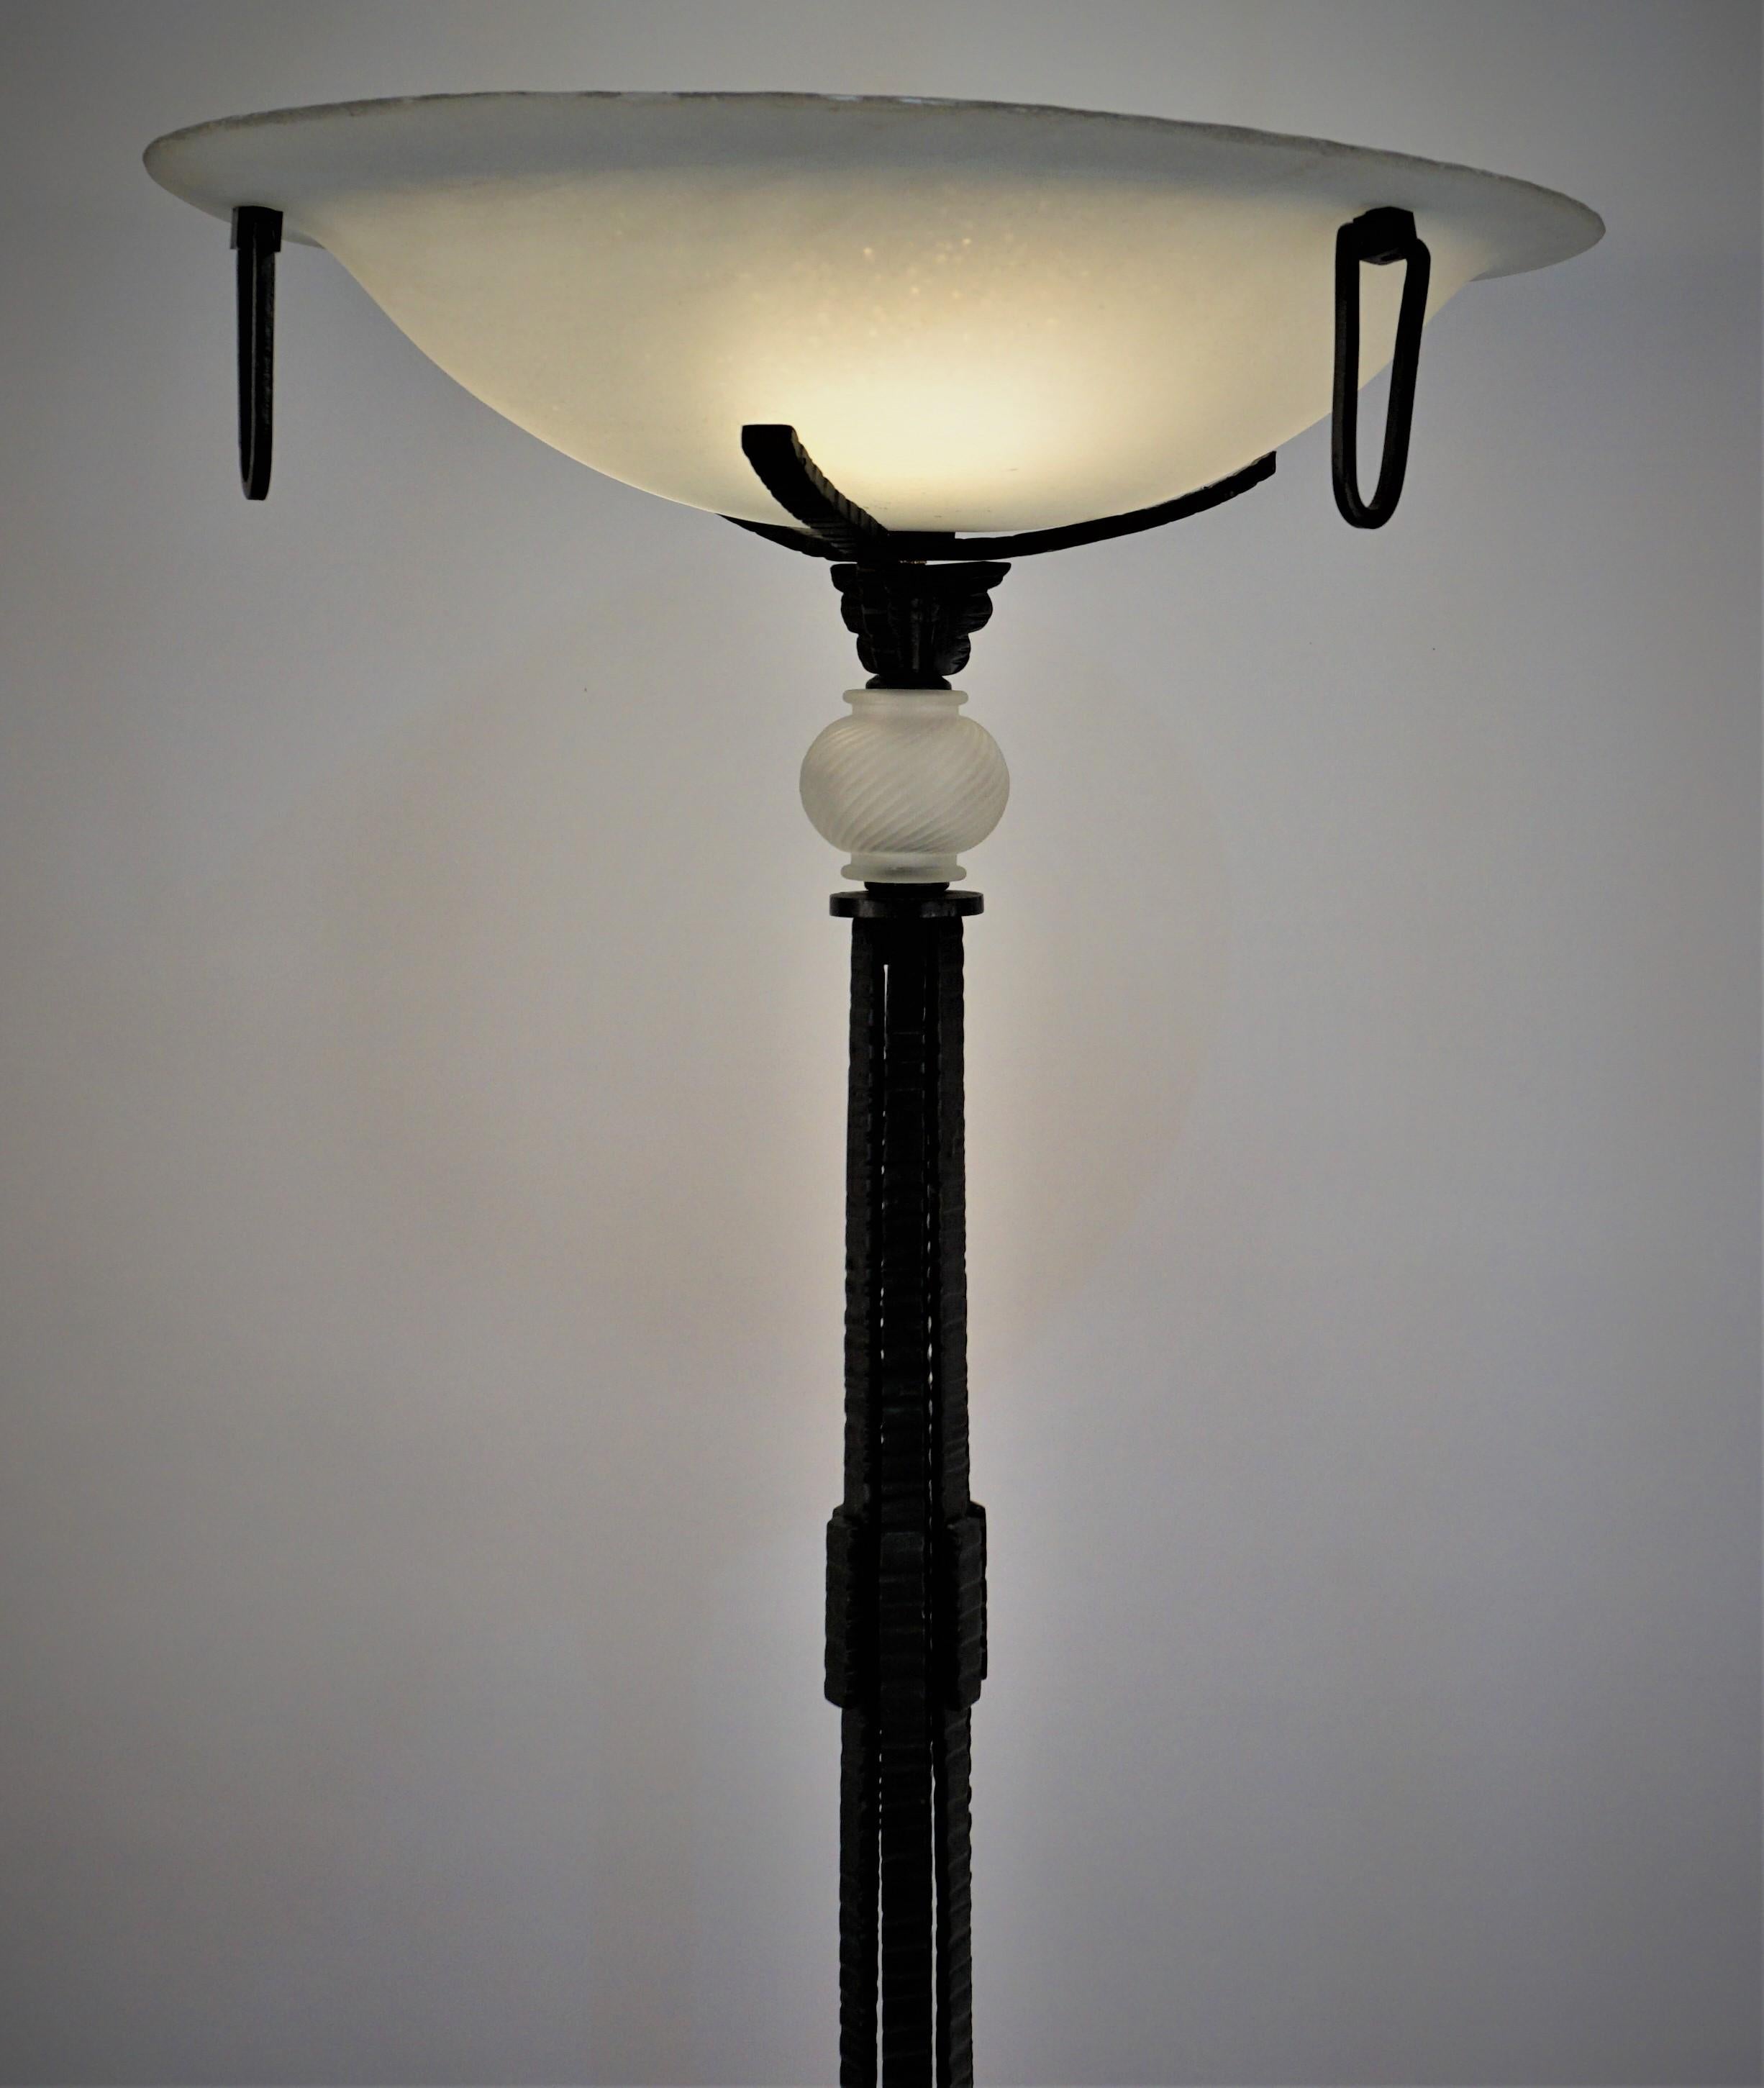 French 1920's art deco handmade iron floor lamp with blown glass shade.